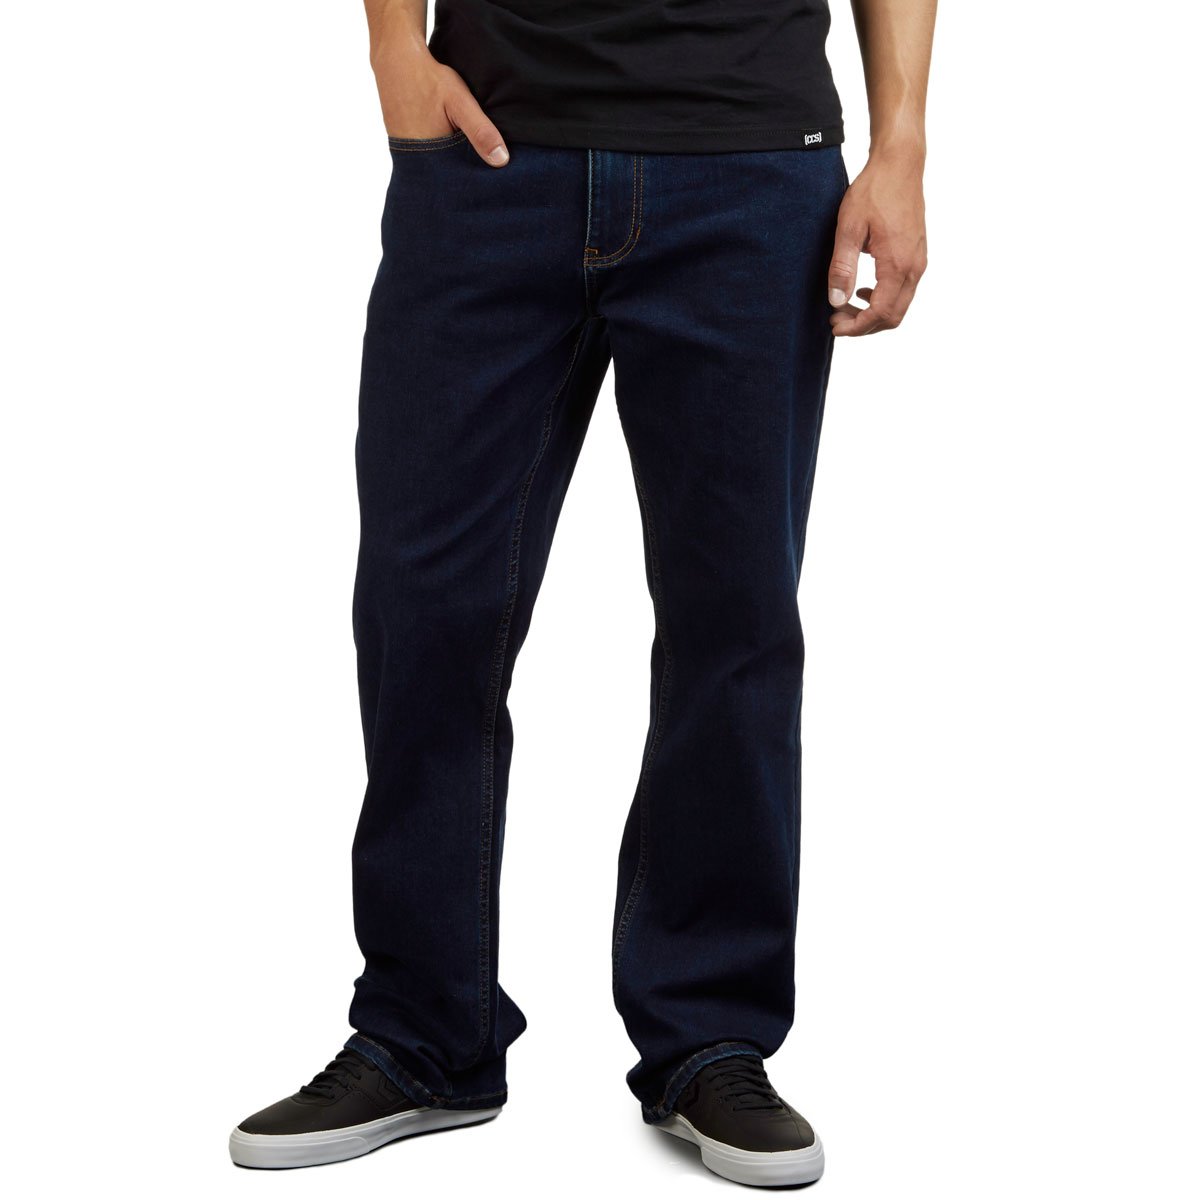 CCS Standard Plus Straight Denim Jeans - Indigo image 1